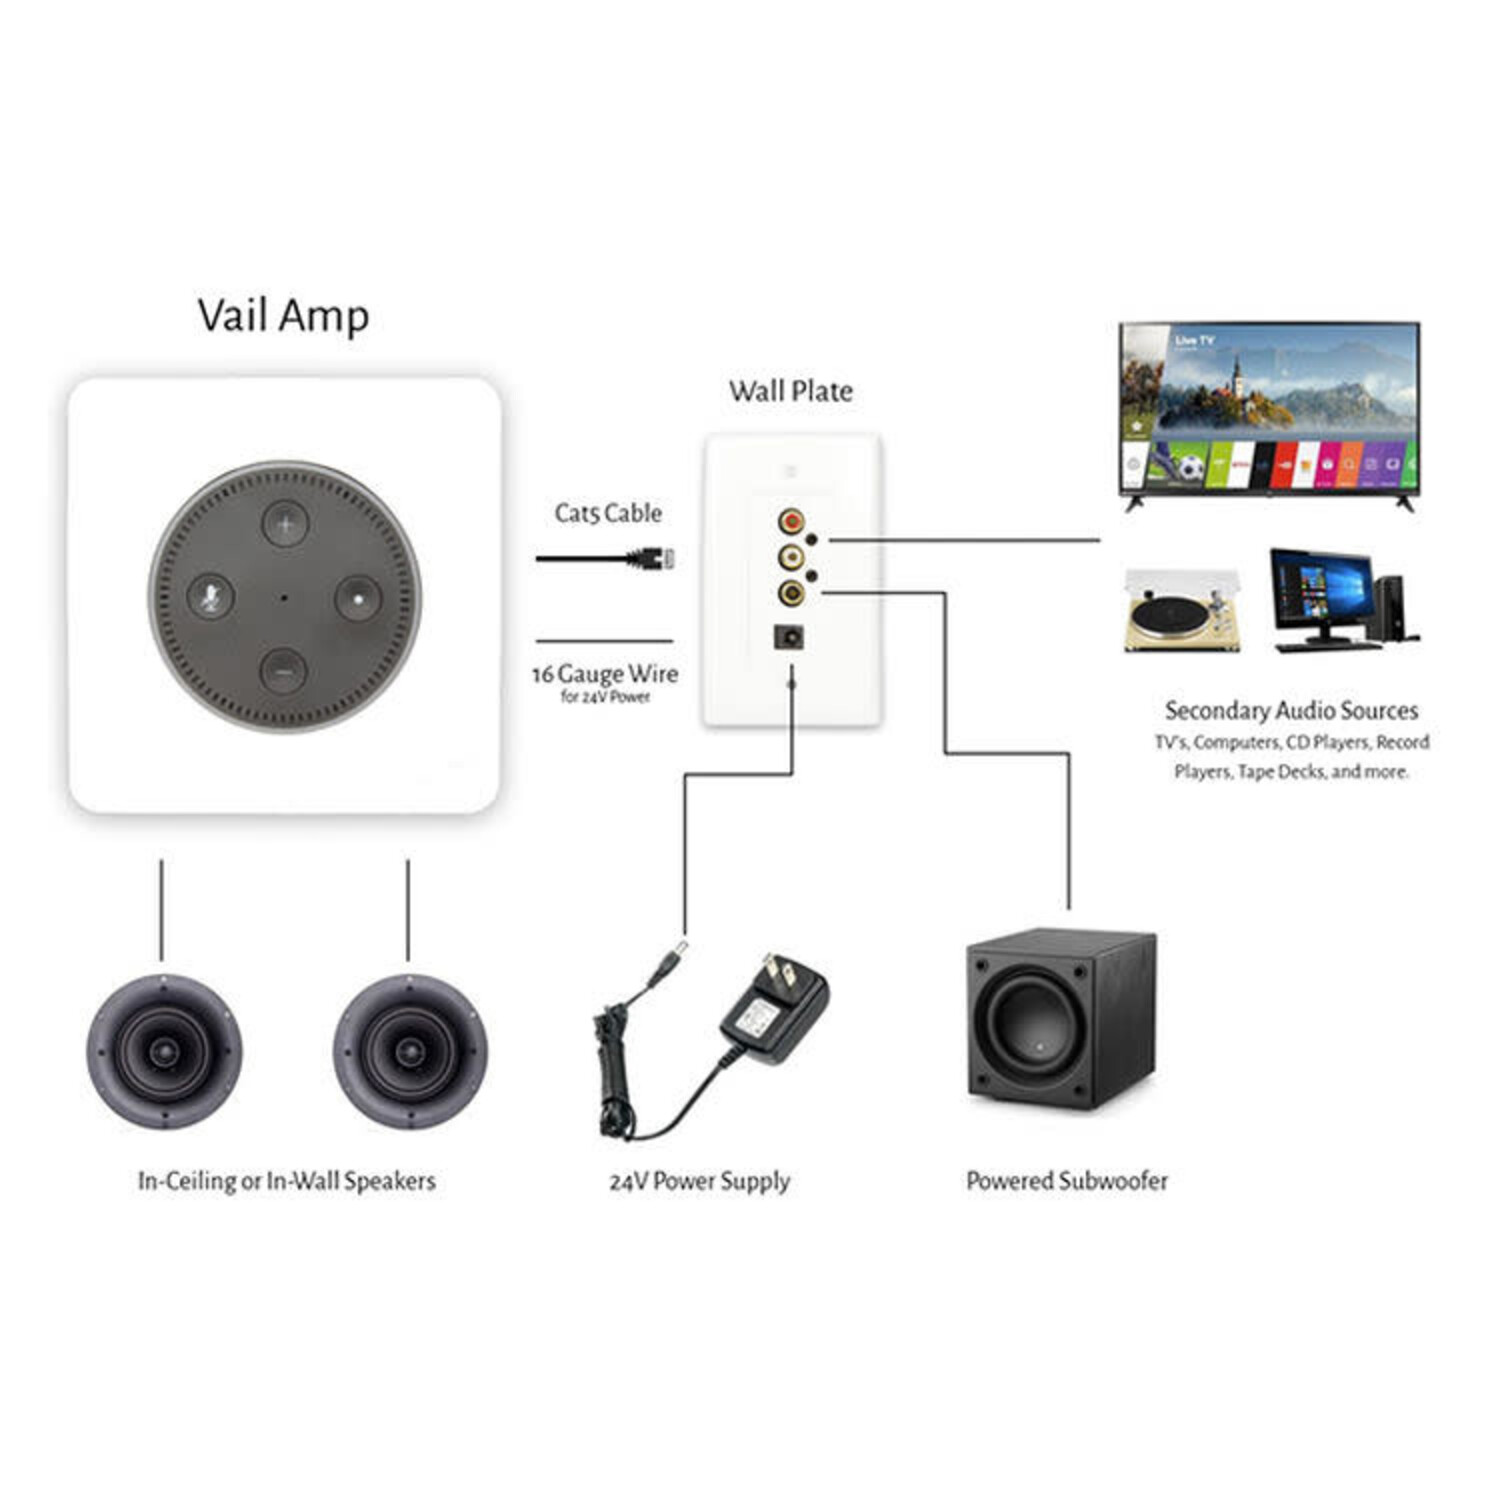 VAIL Amp 3 Amplifier For Echo Dot 3rd Generation - Vanguard Dynamics